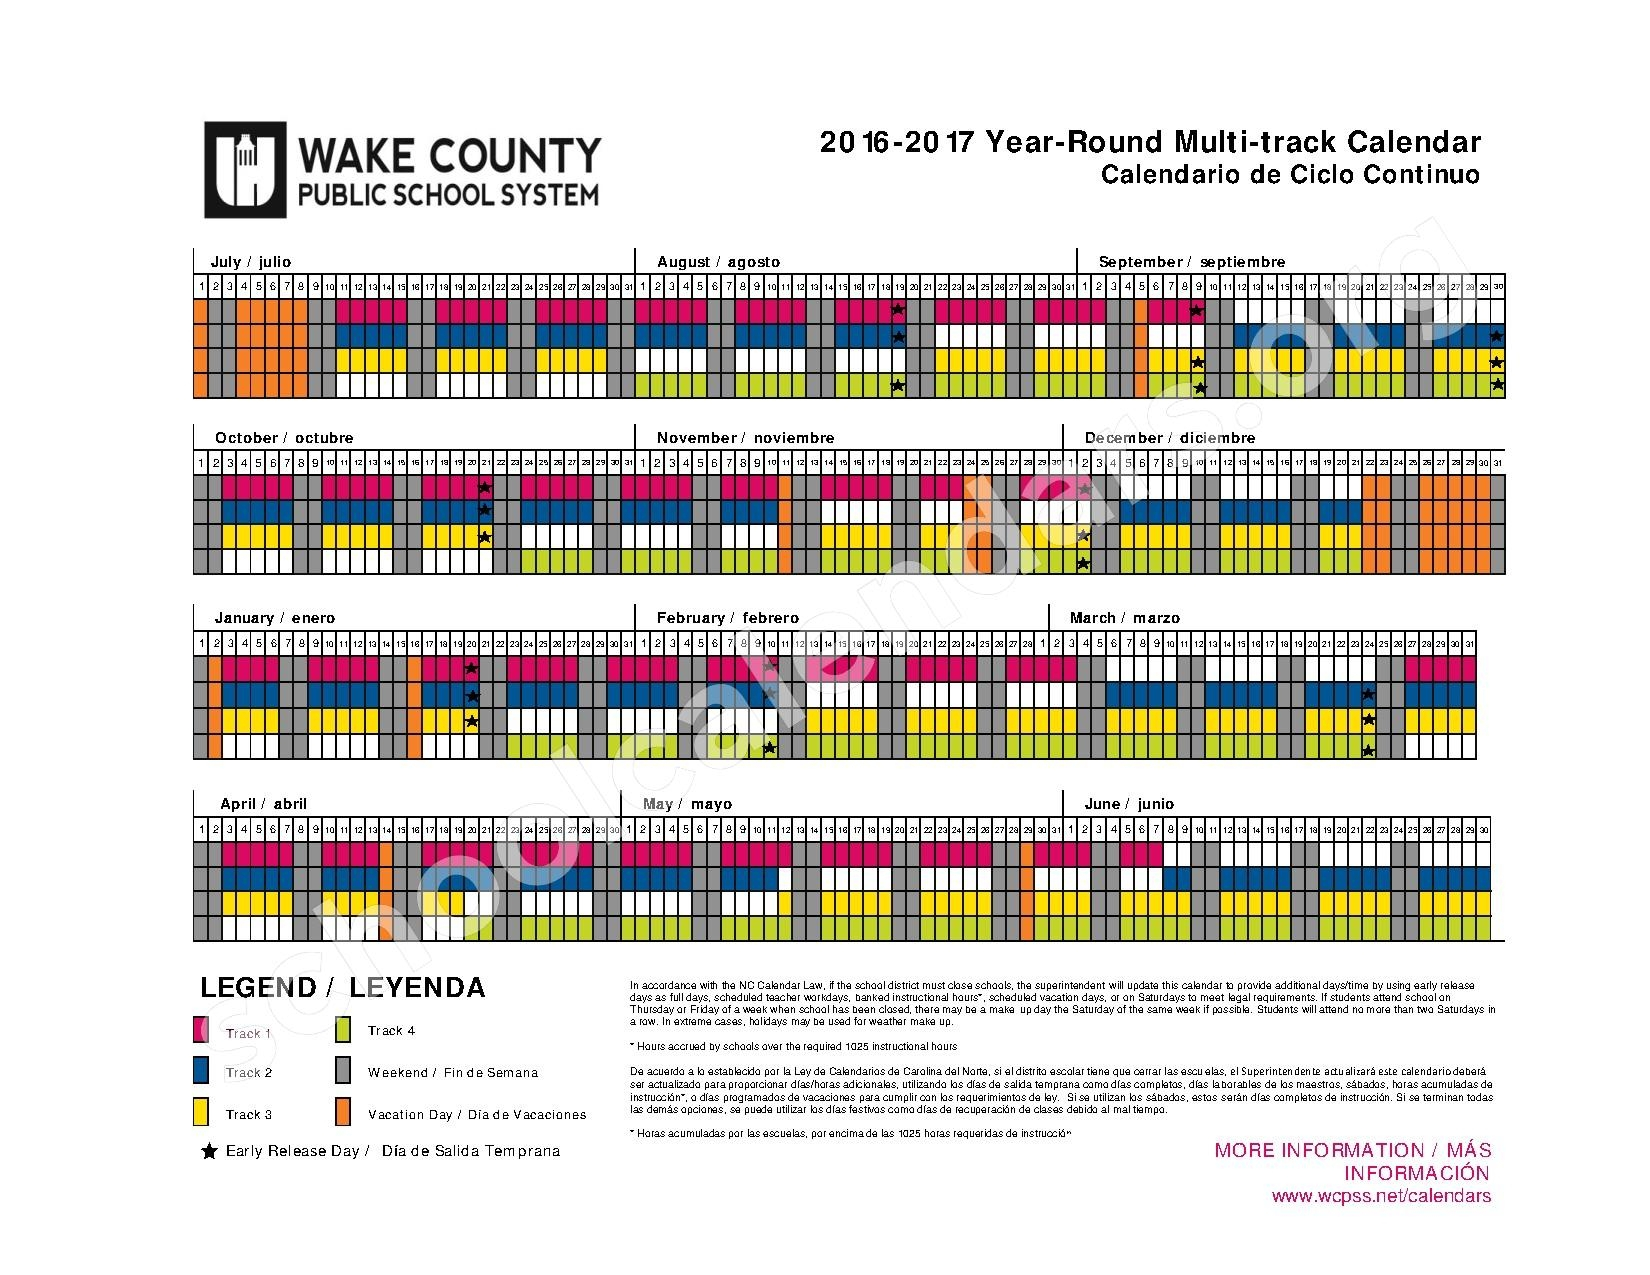 Wake County Year Round Calendar Qualads